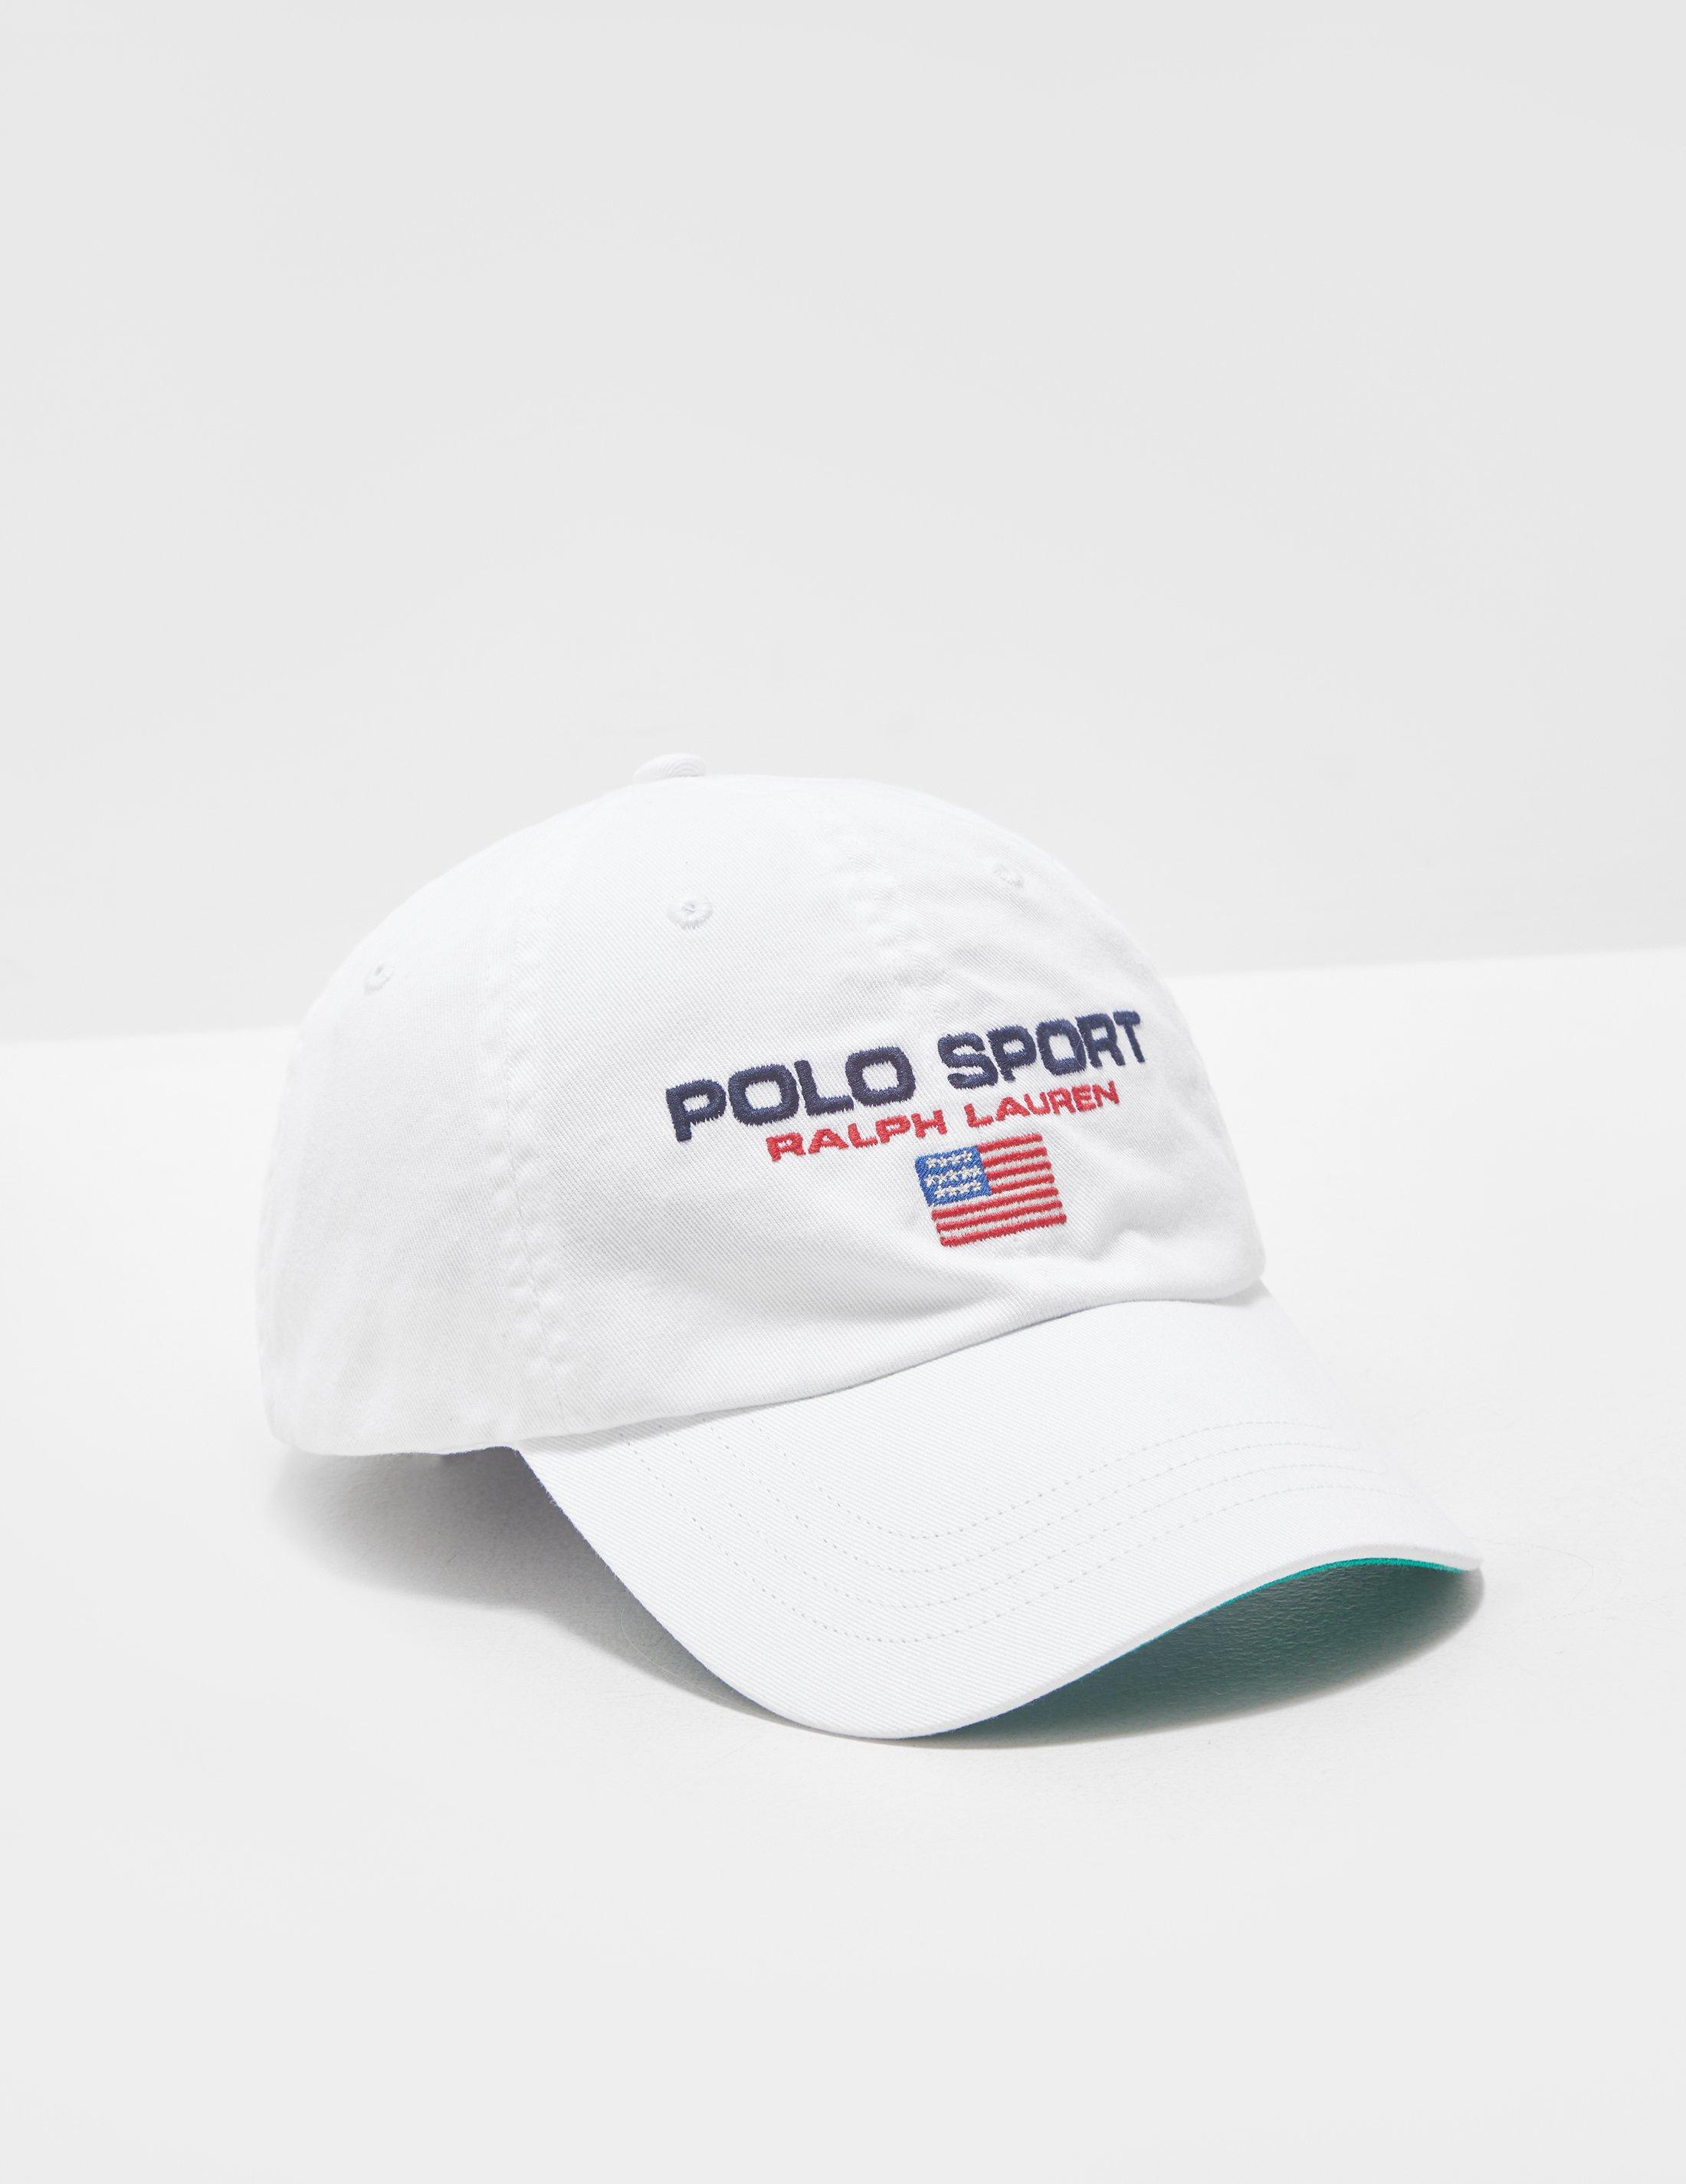 Polo Ralph Lauren Cotton Polo Sport Cap in White for Men - Lyst